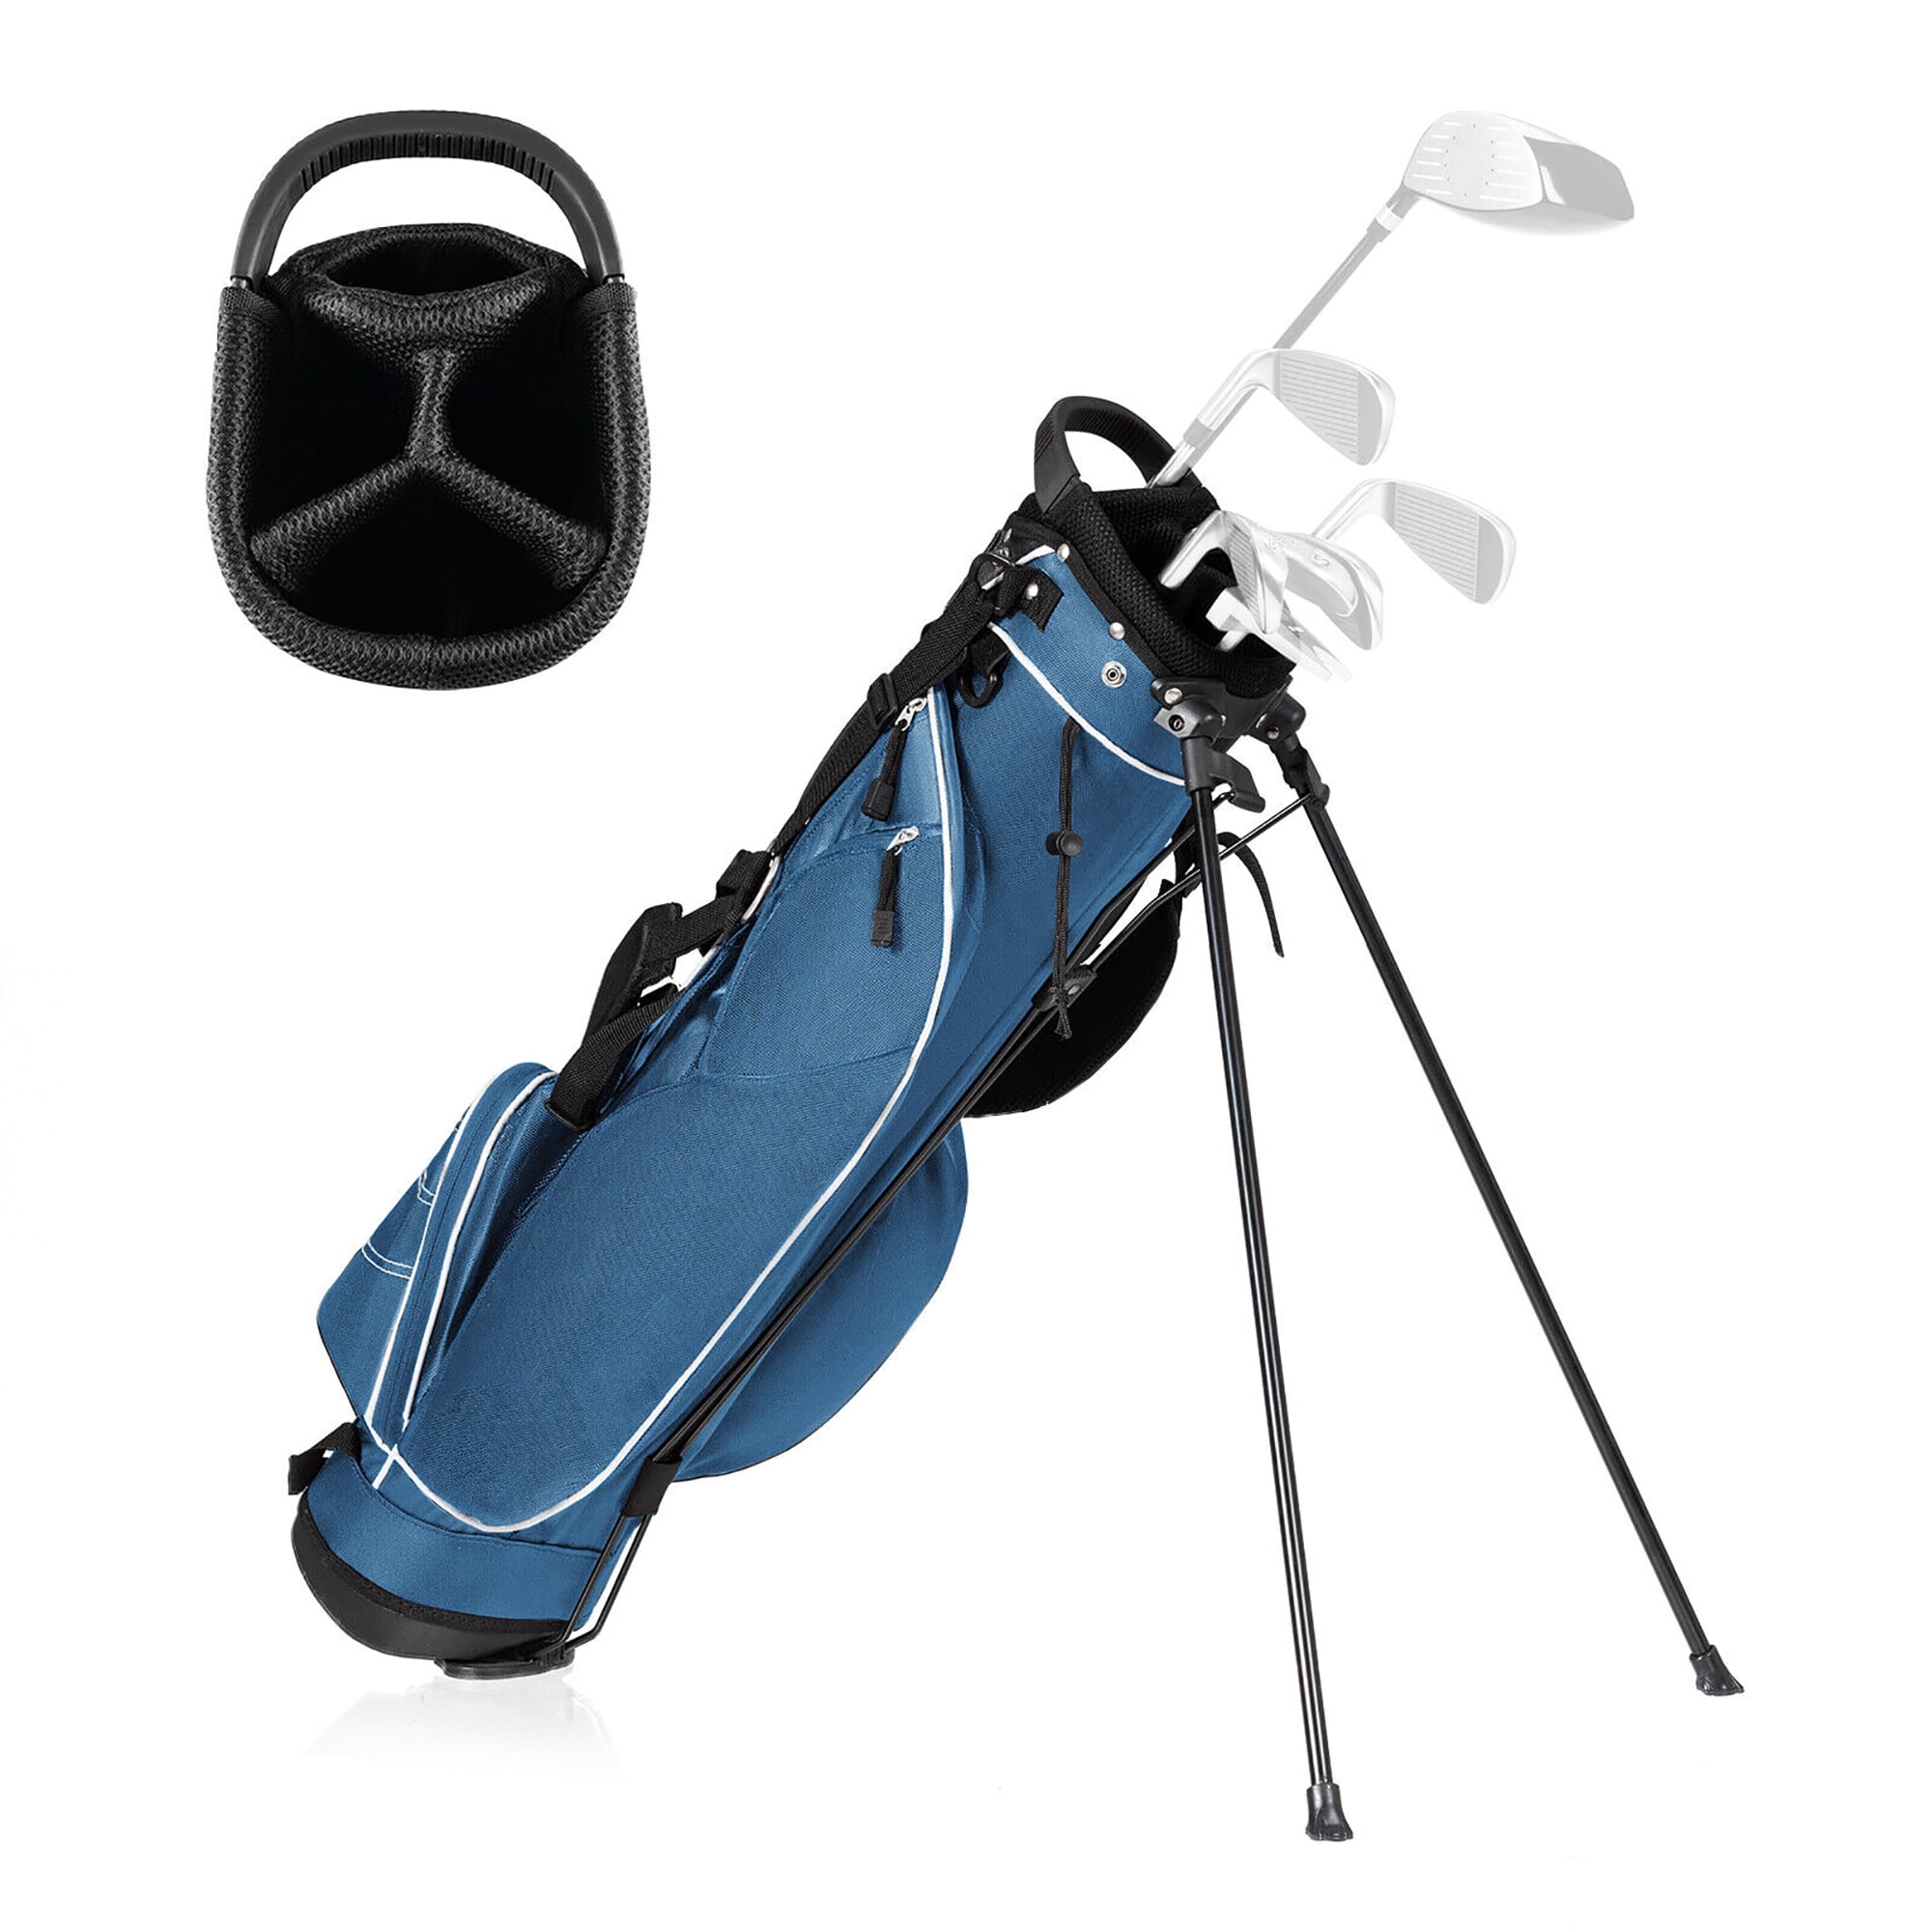 Gymax Blue Golf Stand Cart Bag Club with Carry Organizer Pockets